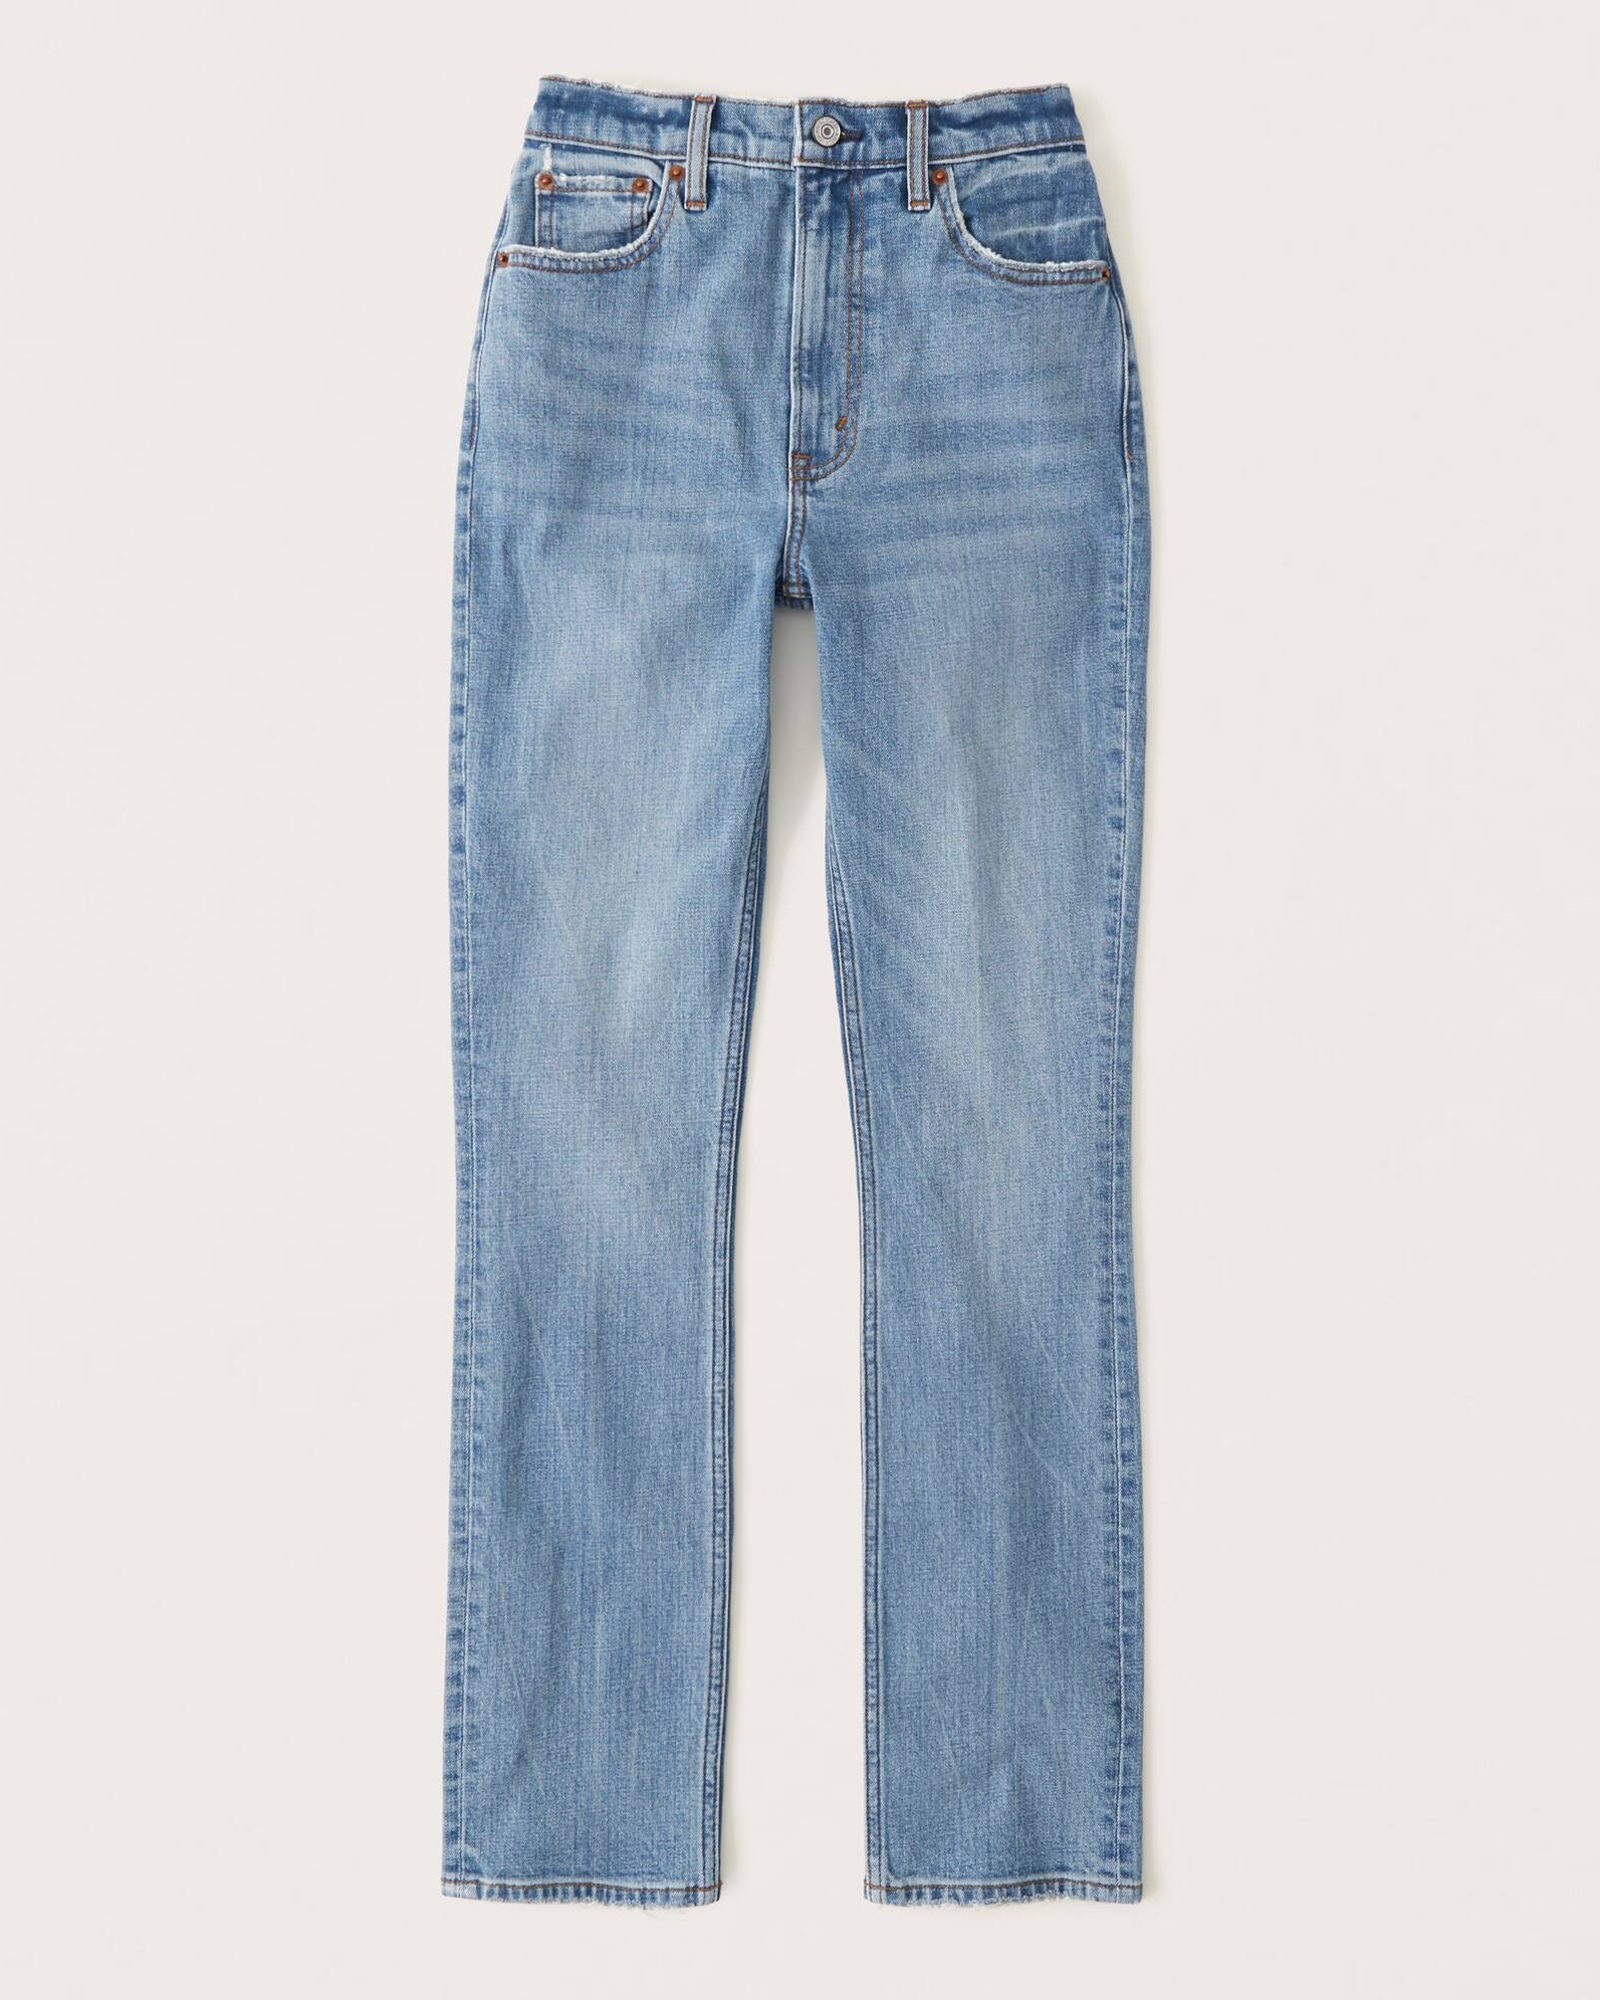 Abercrombie Jeans Size Chart - Hood MWR